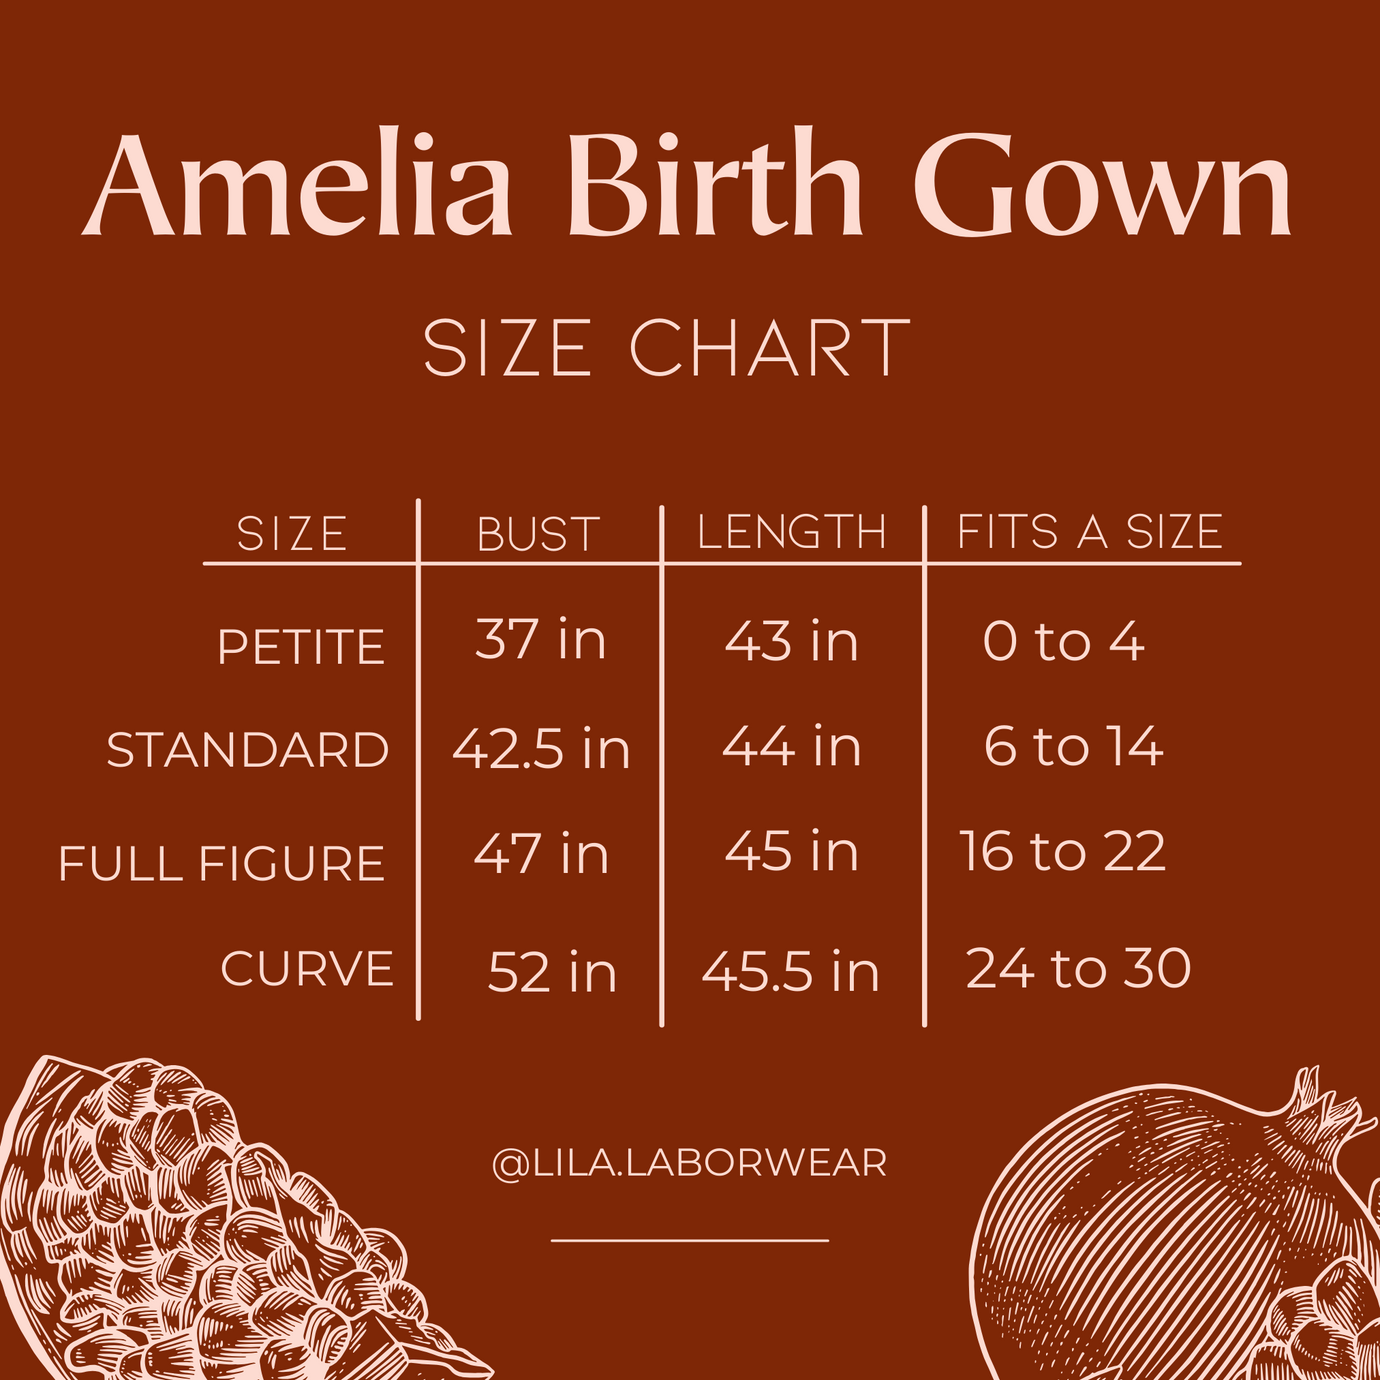 Amelia birth gown size chart